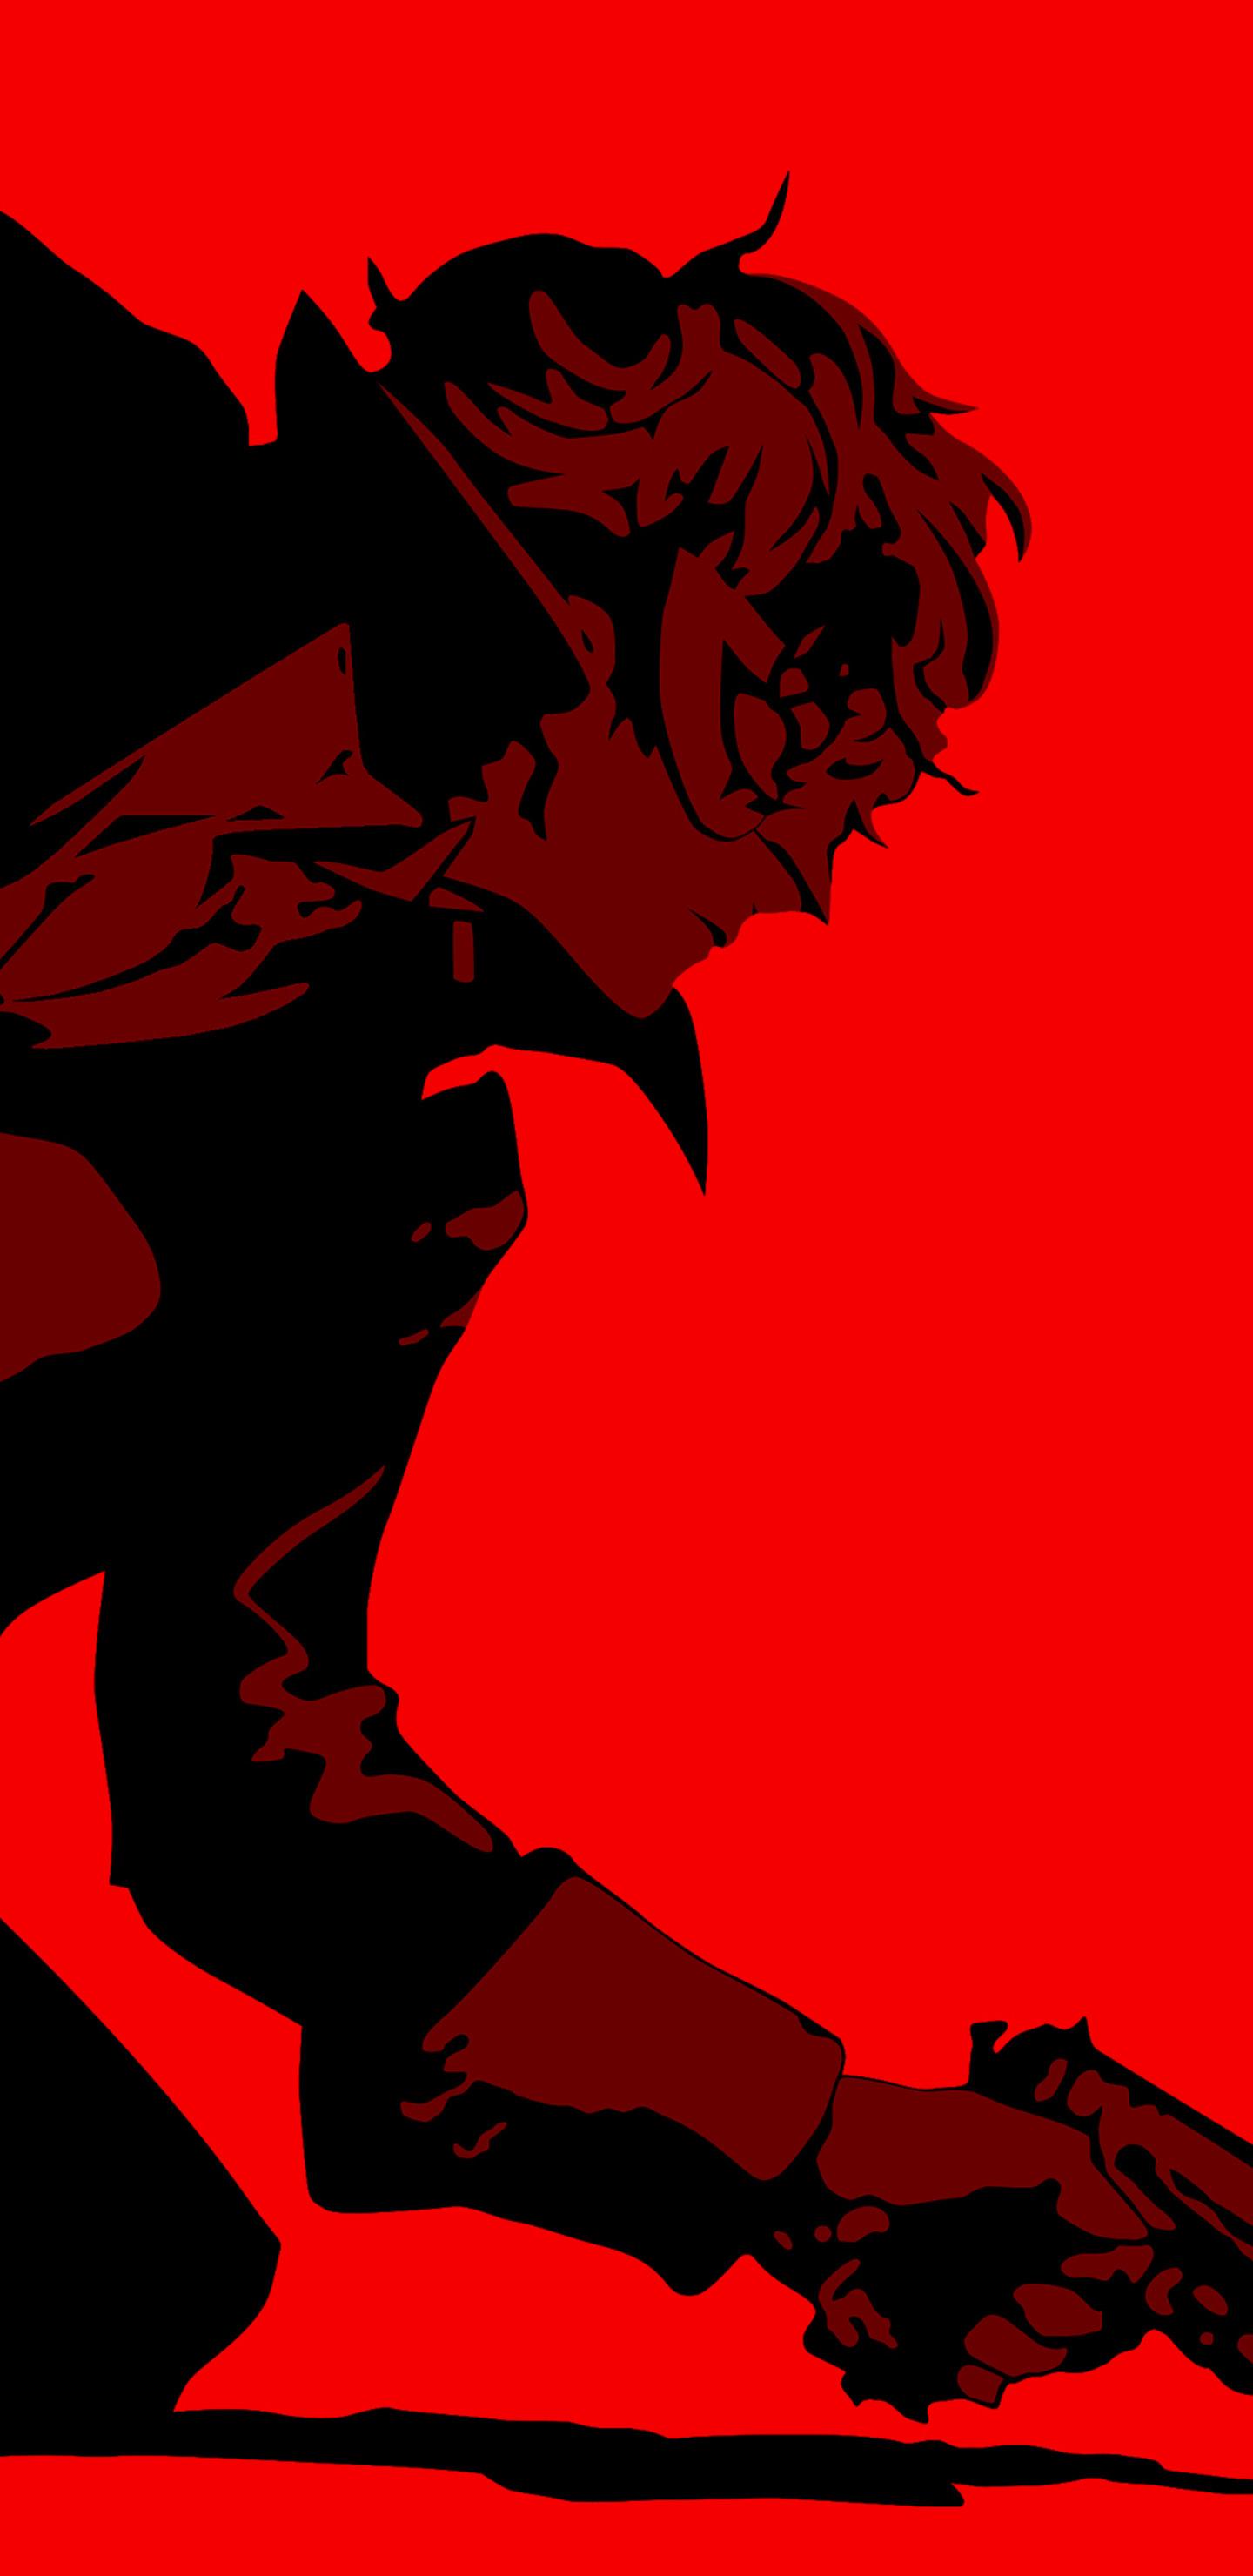 Persona 5 Wallpaper background picture